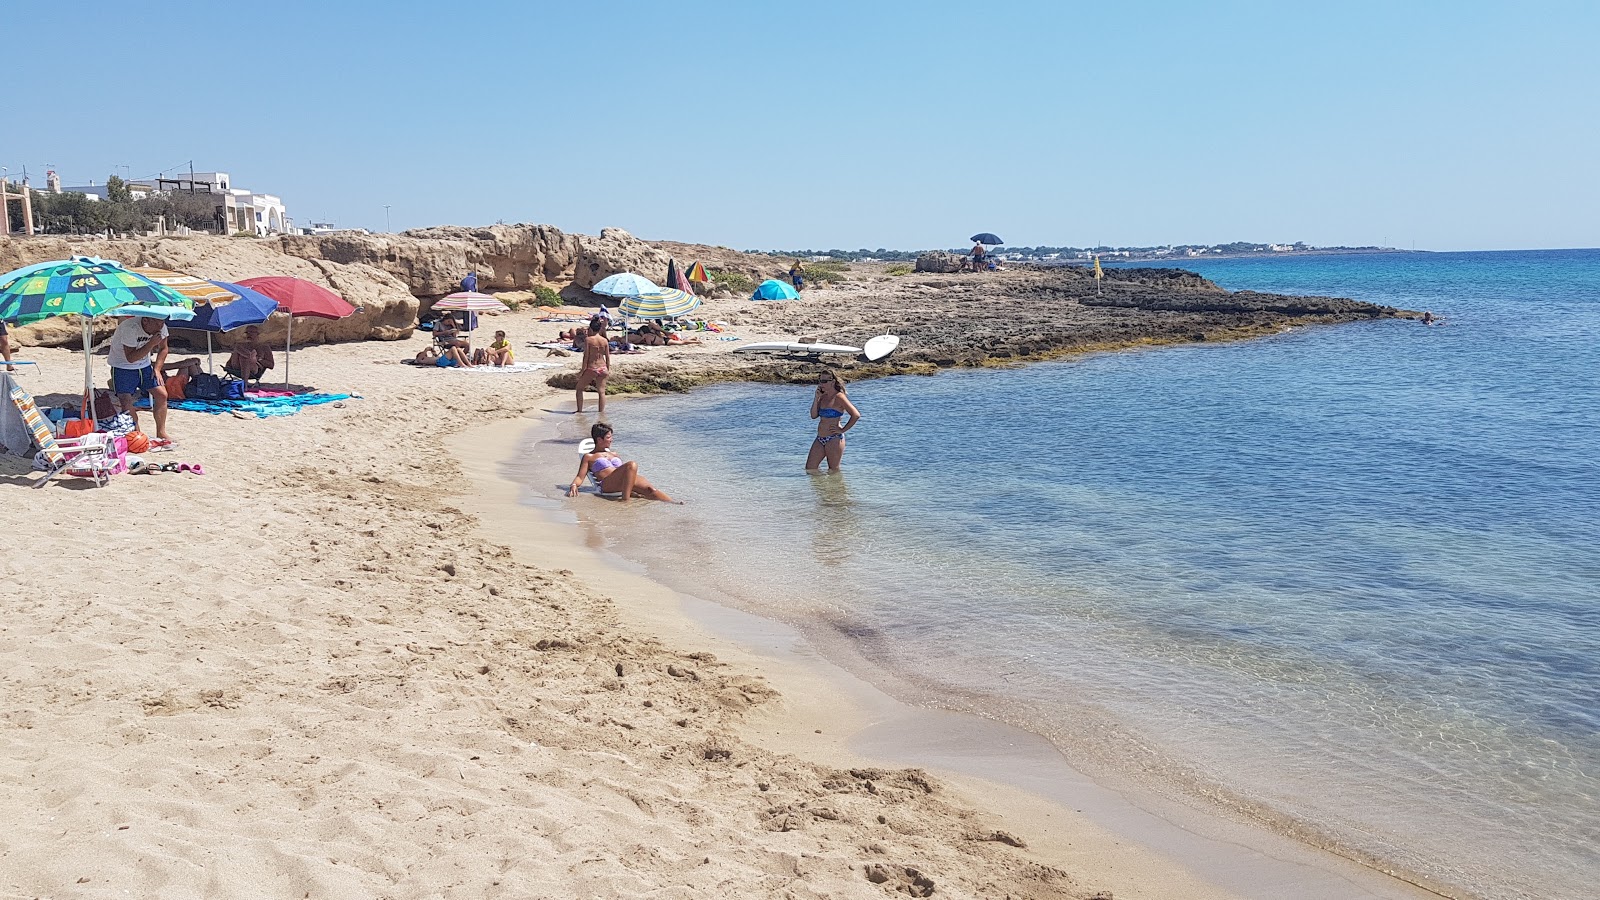 Fotografie cu Spiaggia del Mare dei Cavalli cu nivelul de curățenie in medie